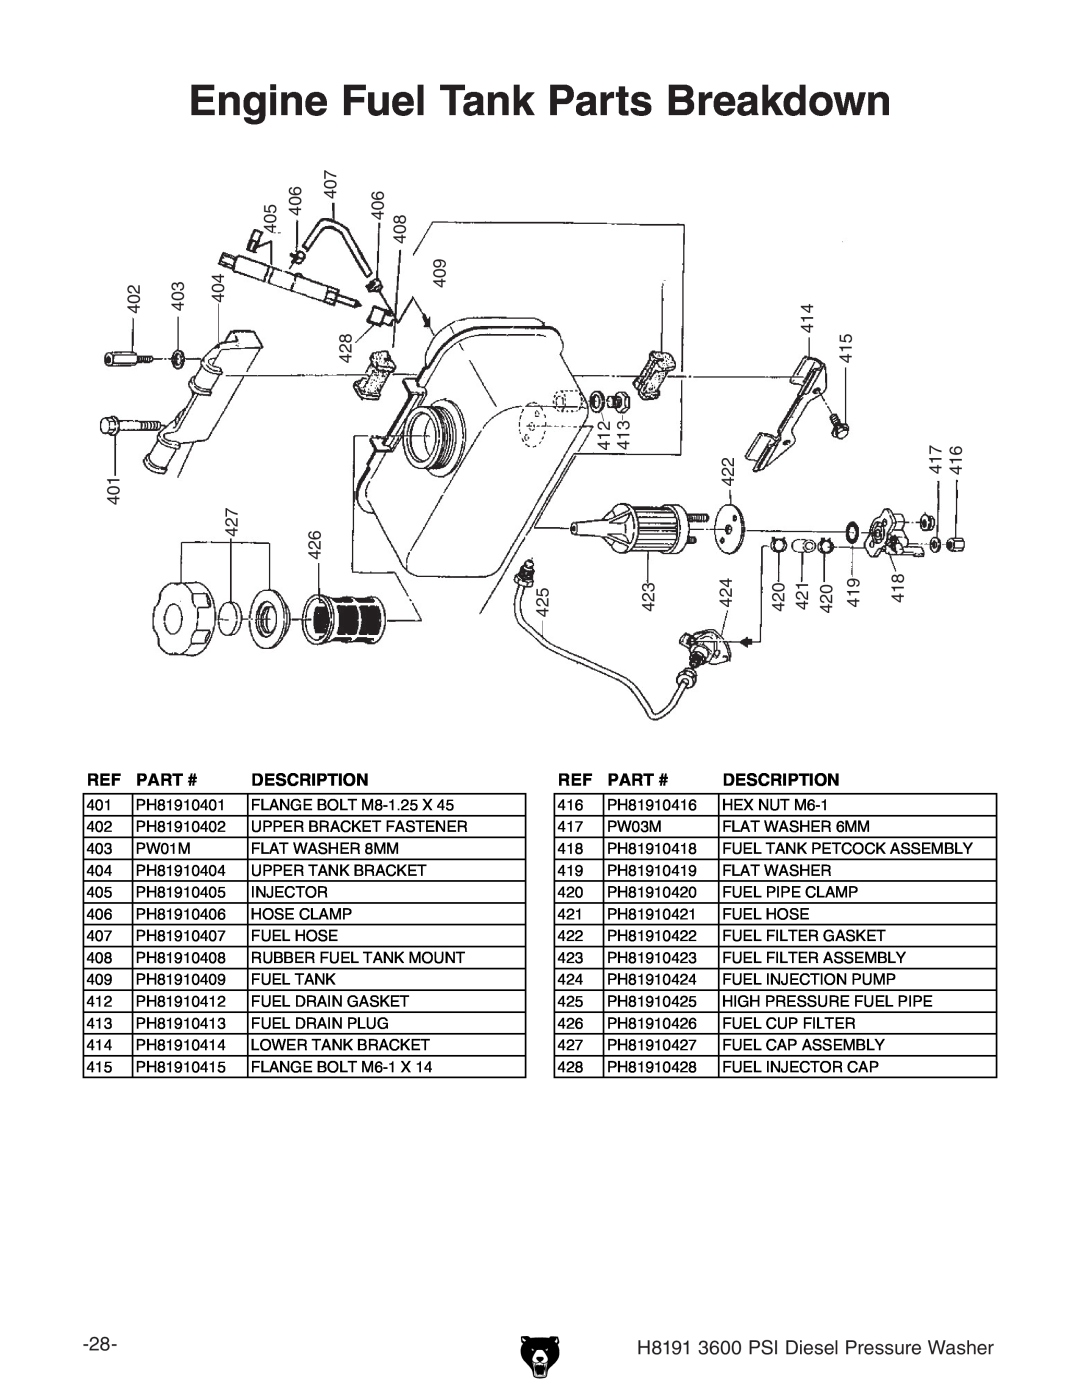 Grizzly manual Engine Fuel Tank Parts Breakdown, H8191 3600 PSI Diesel Pressure Washer, Part #, Description 